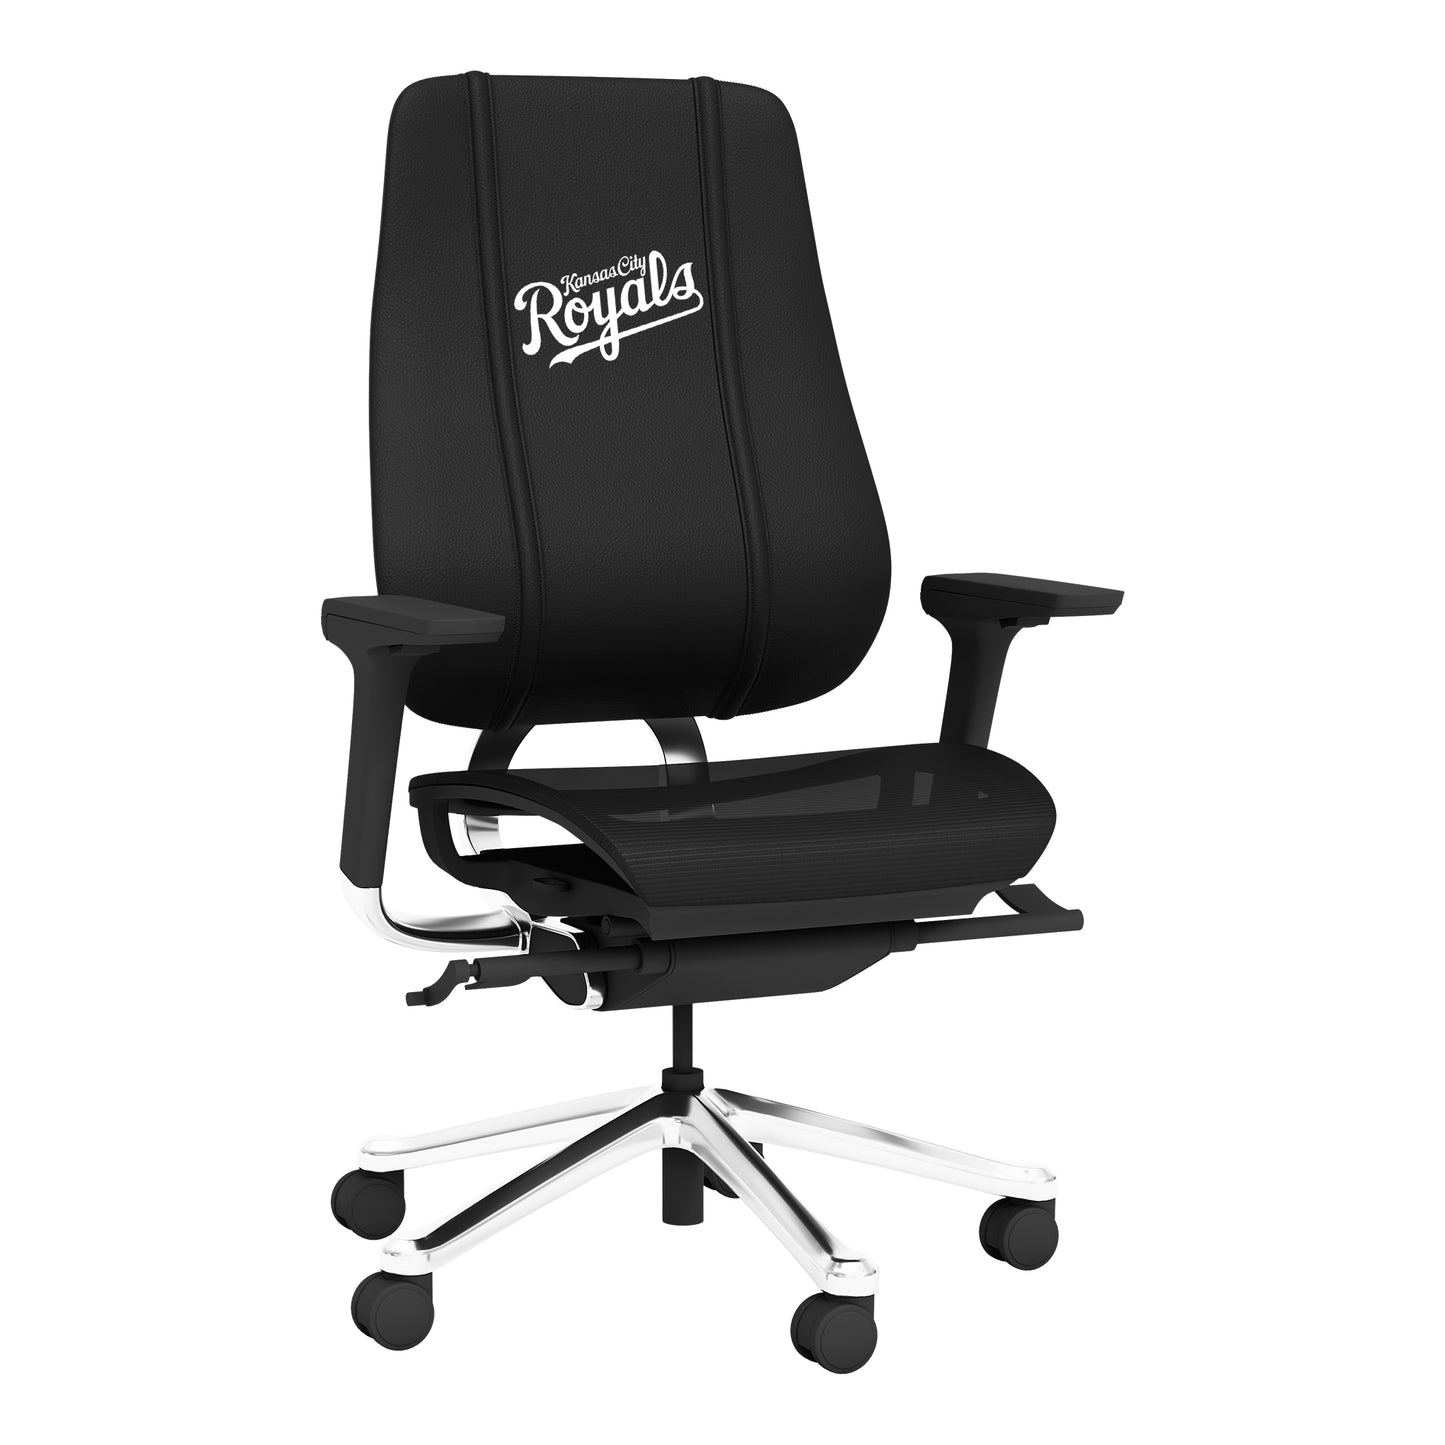 PhantomX Mesh Gaming Chair with Kansas City Royals Wordmark Logo